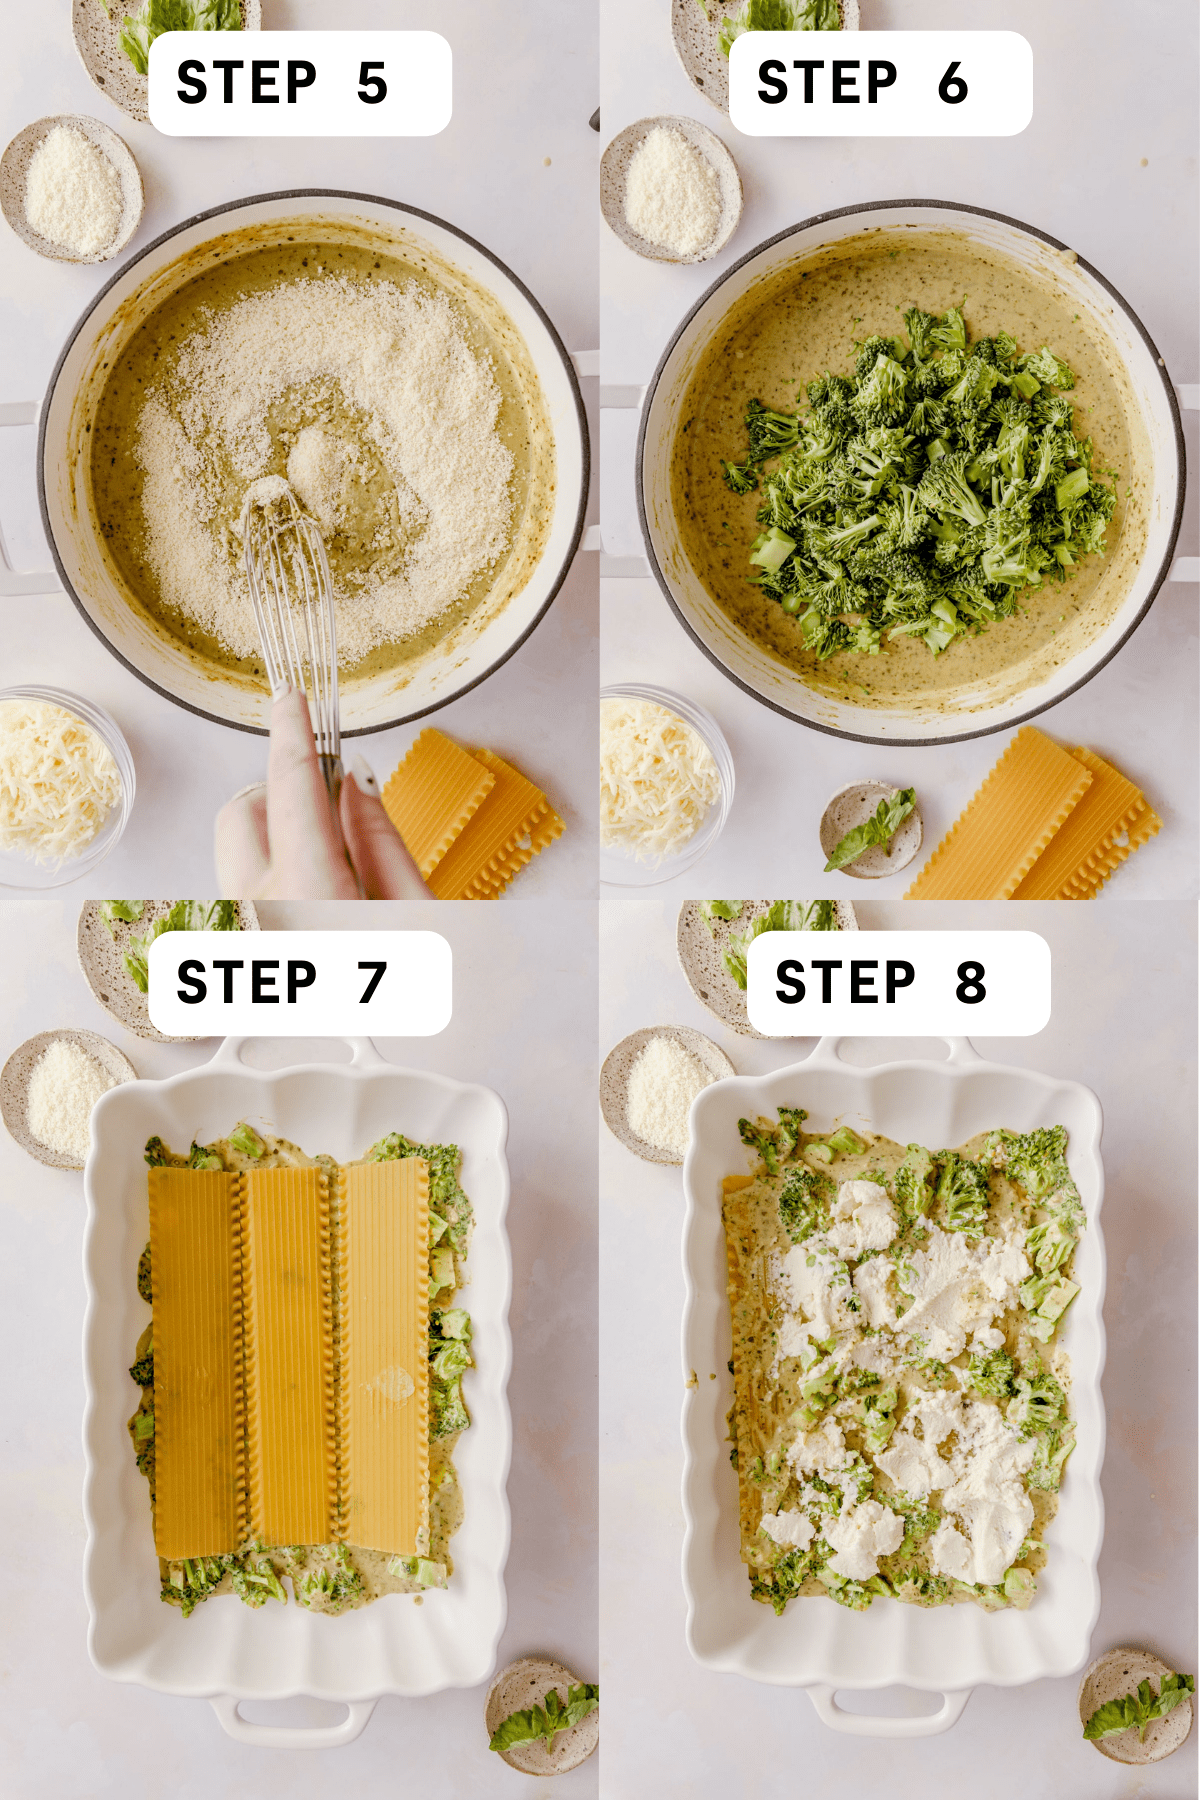 Steps 5-8 for making Chicken Broccoli Lasagna.